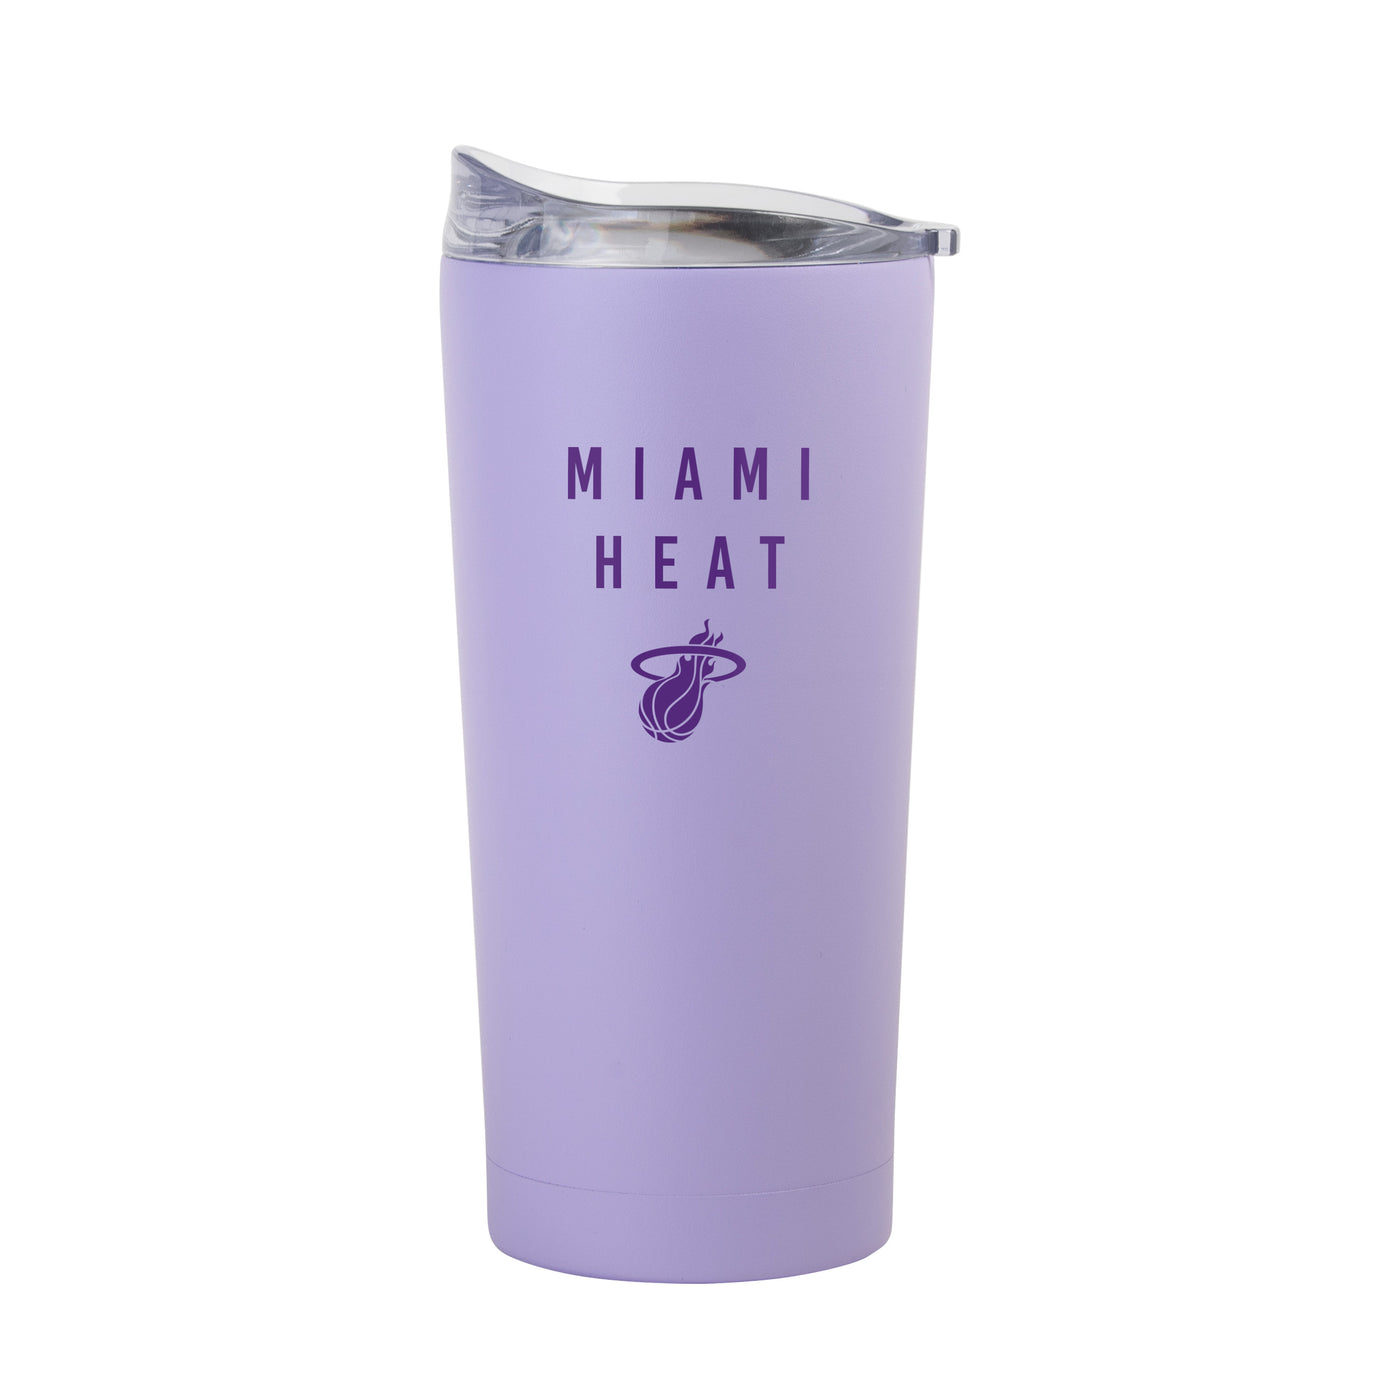 Miami Heat 20oz Tonal Lavender Powder Coat Tumbler